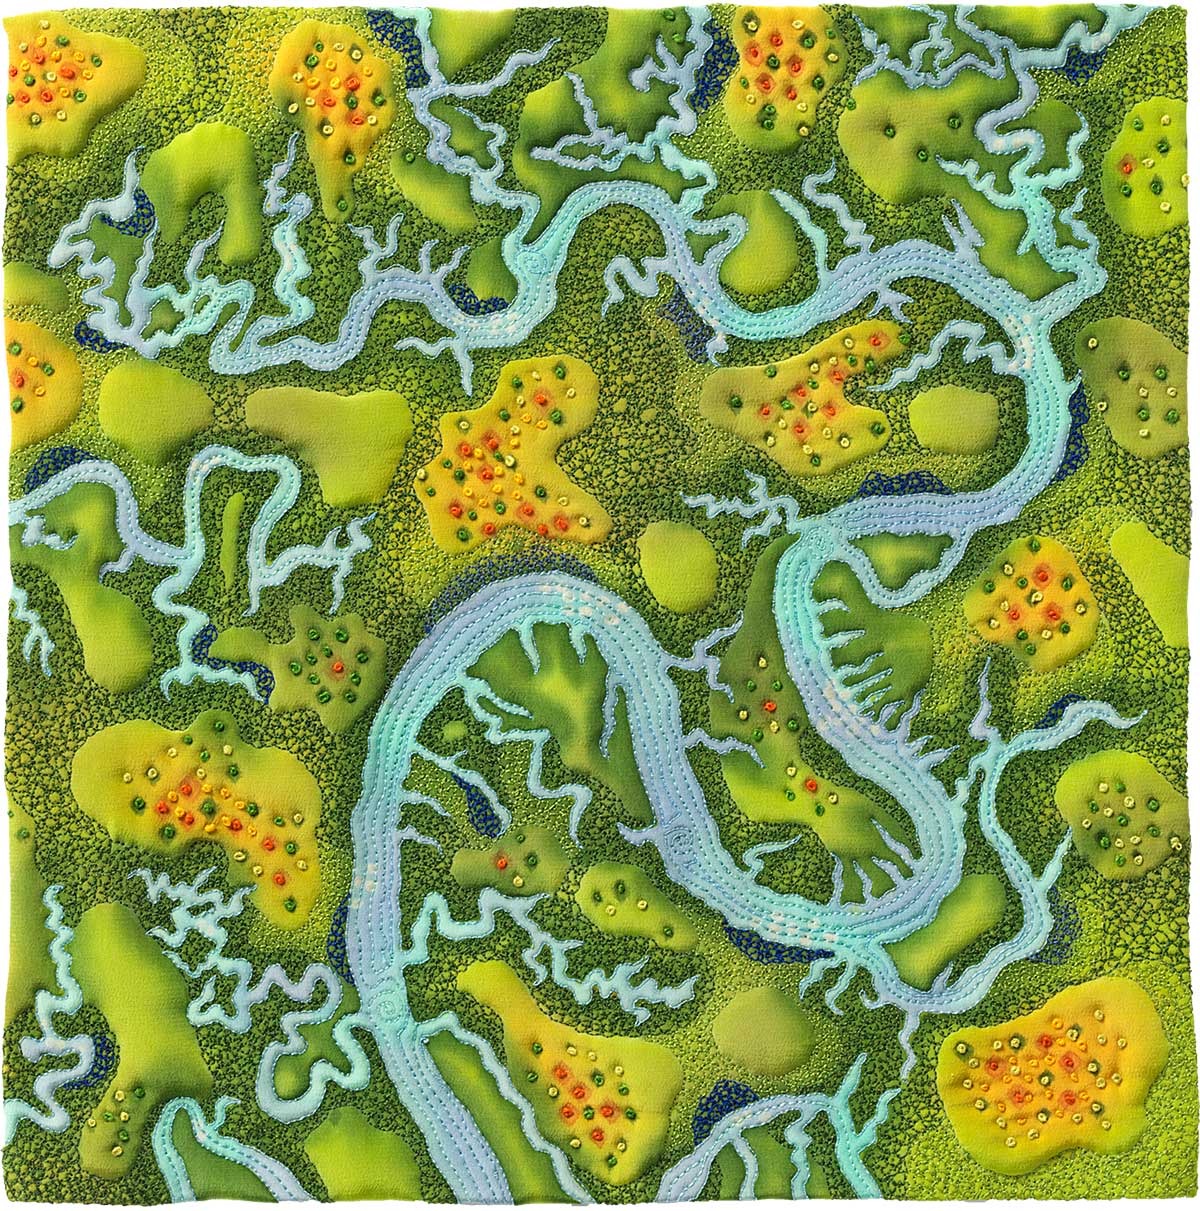 Detail image of Hard & Soft Series: Reseeding Wetlands (textile) ©2018 Linda Gass